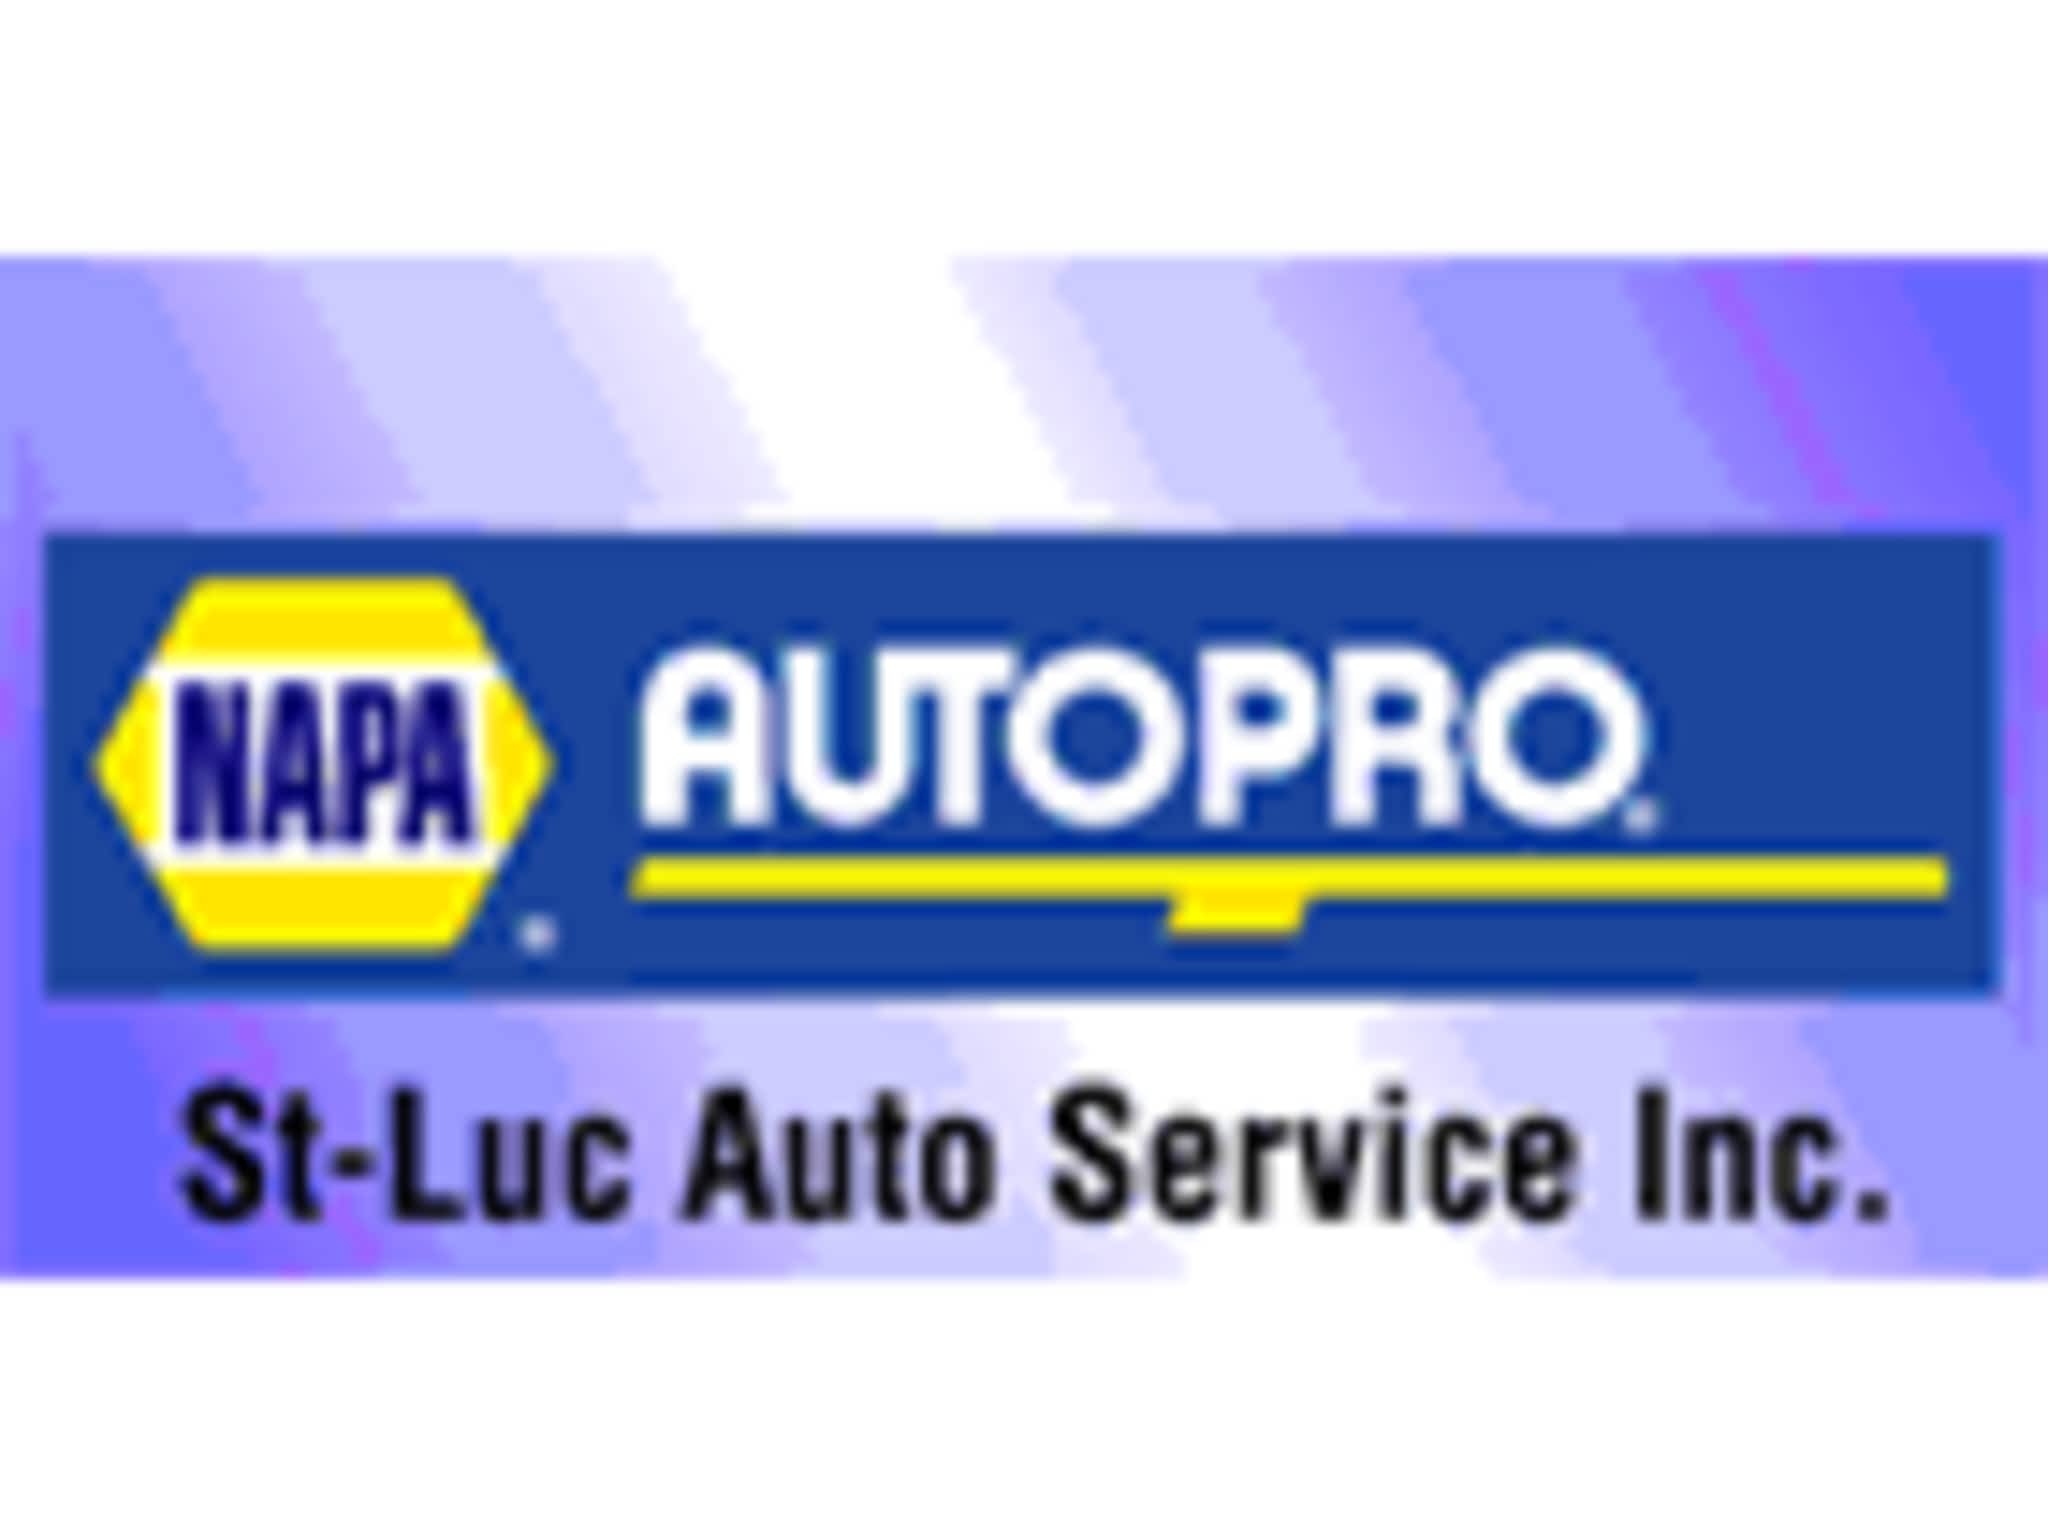 photo NAPA AUTOPRO - St-Luc Auto Service Inc